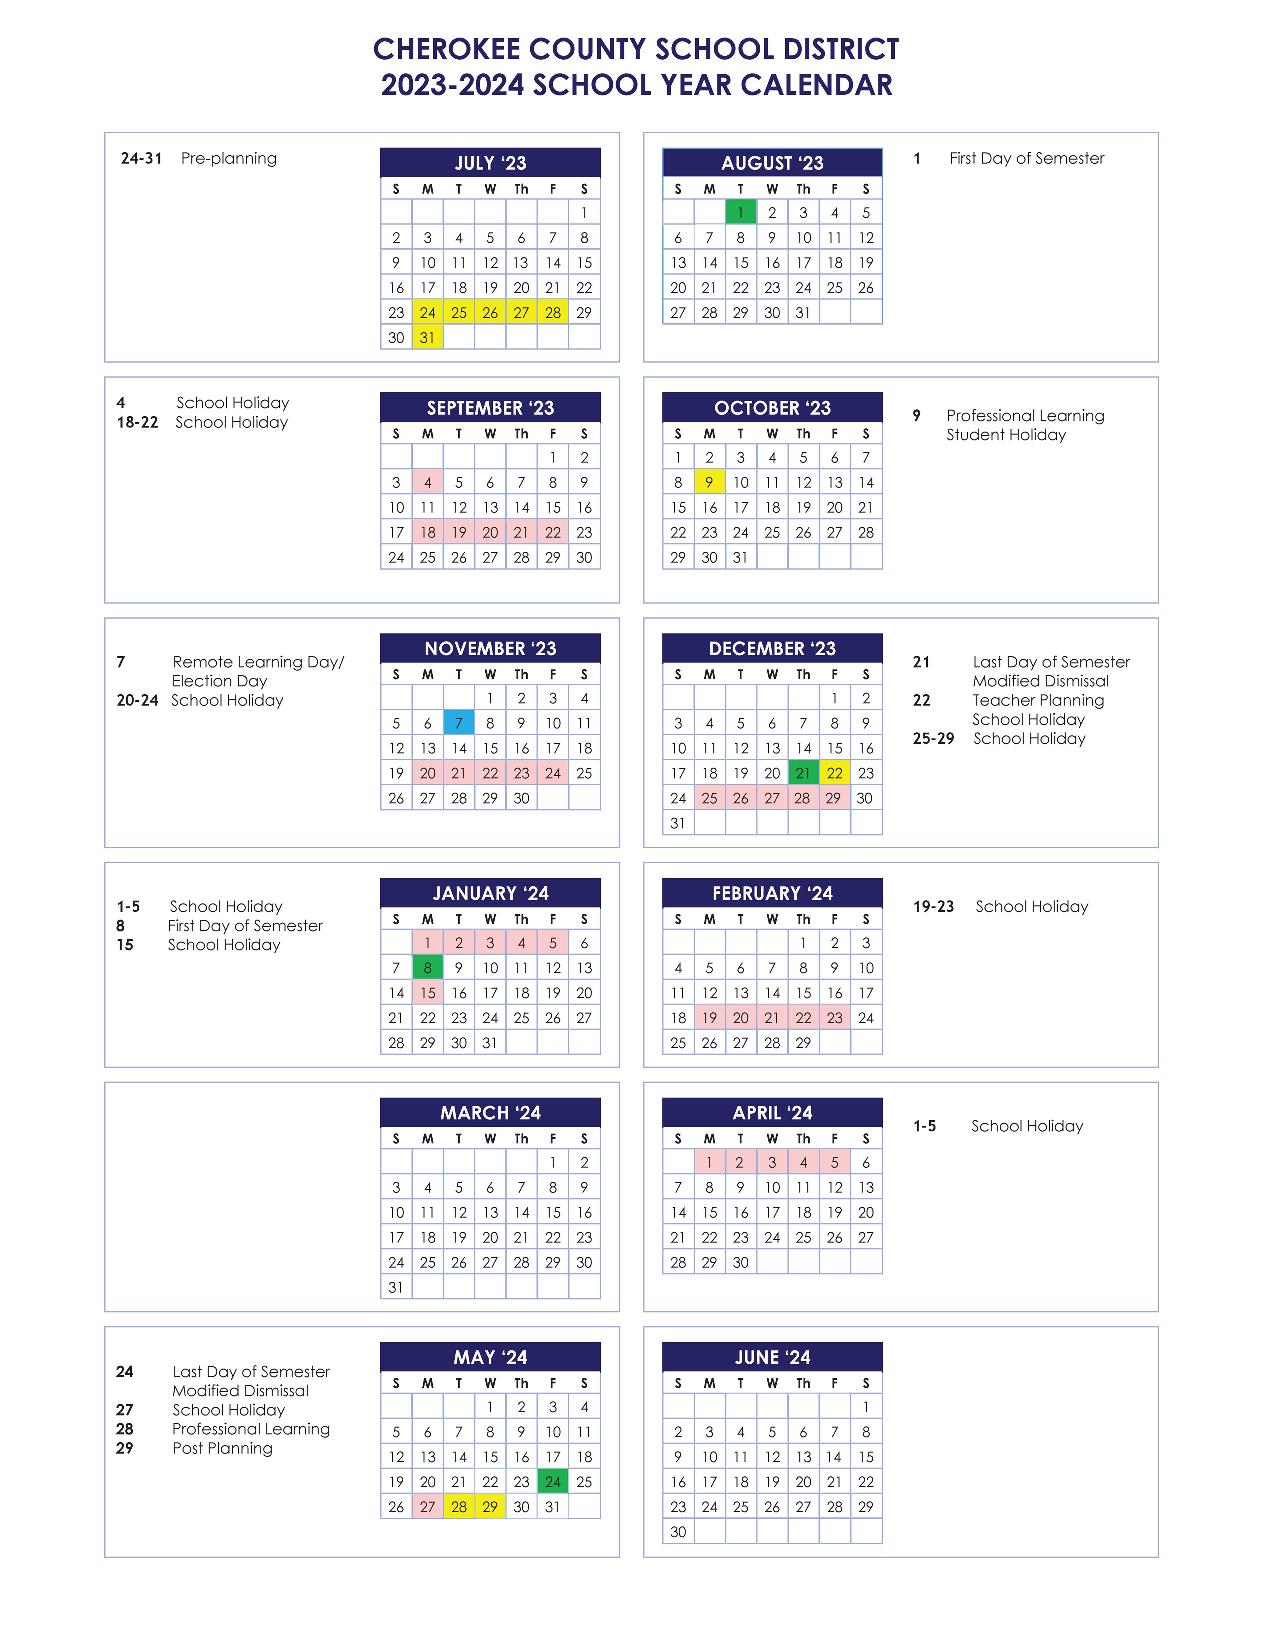 Cherokee County School District Calendar 2023 2024 in PDF